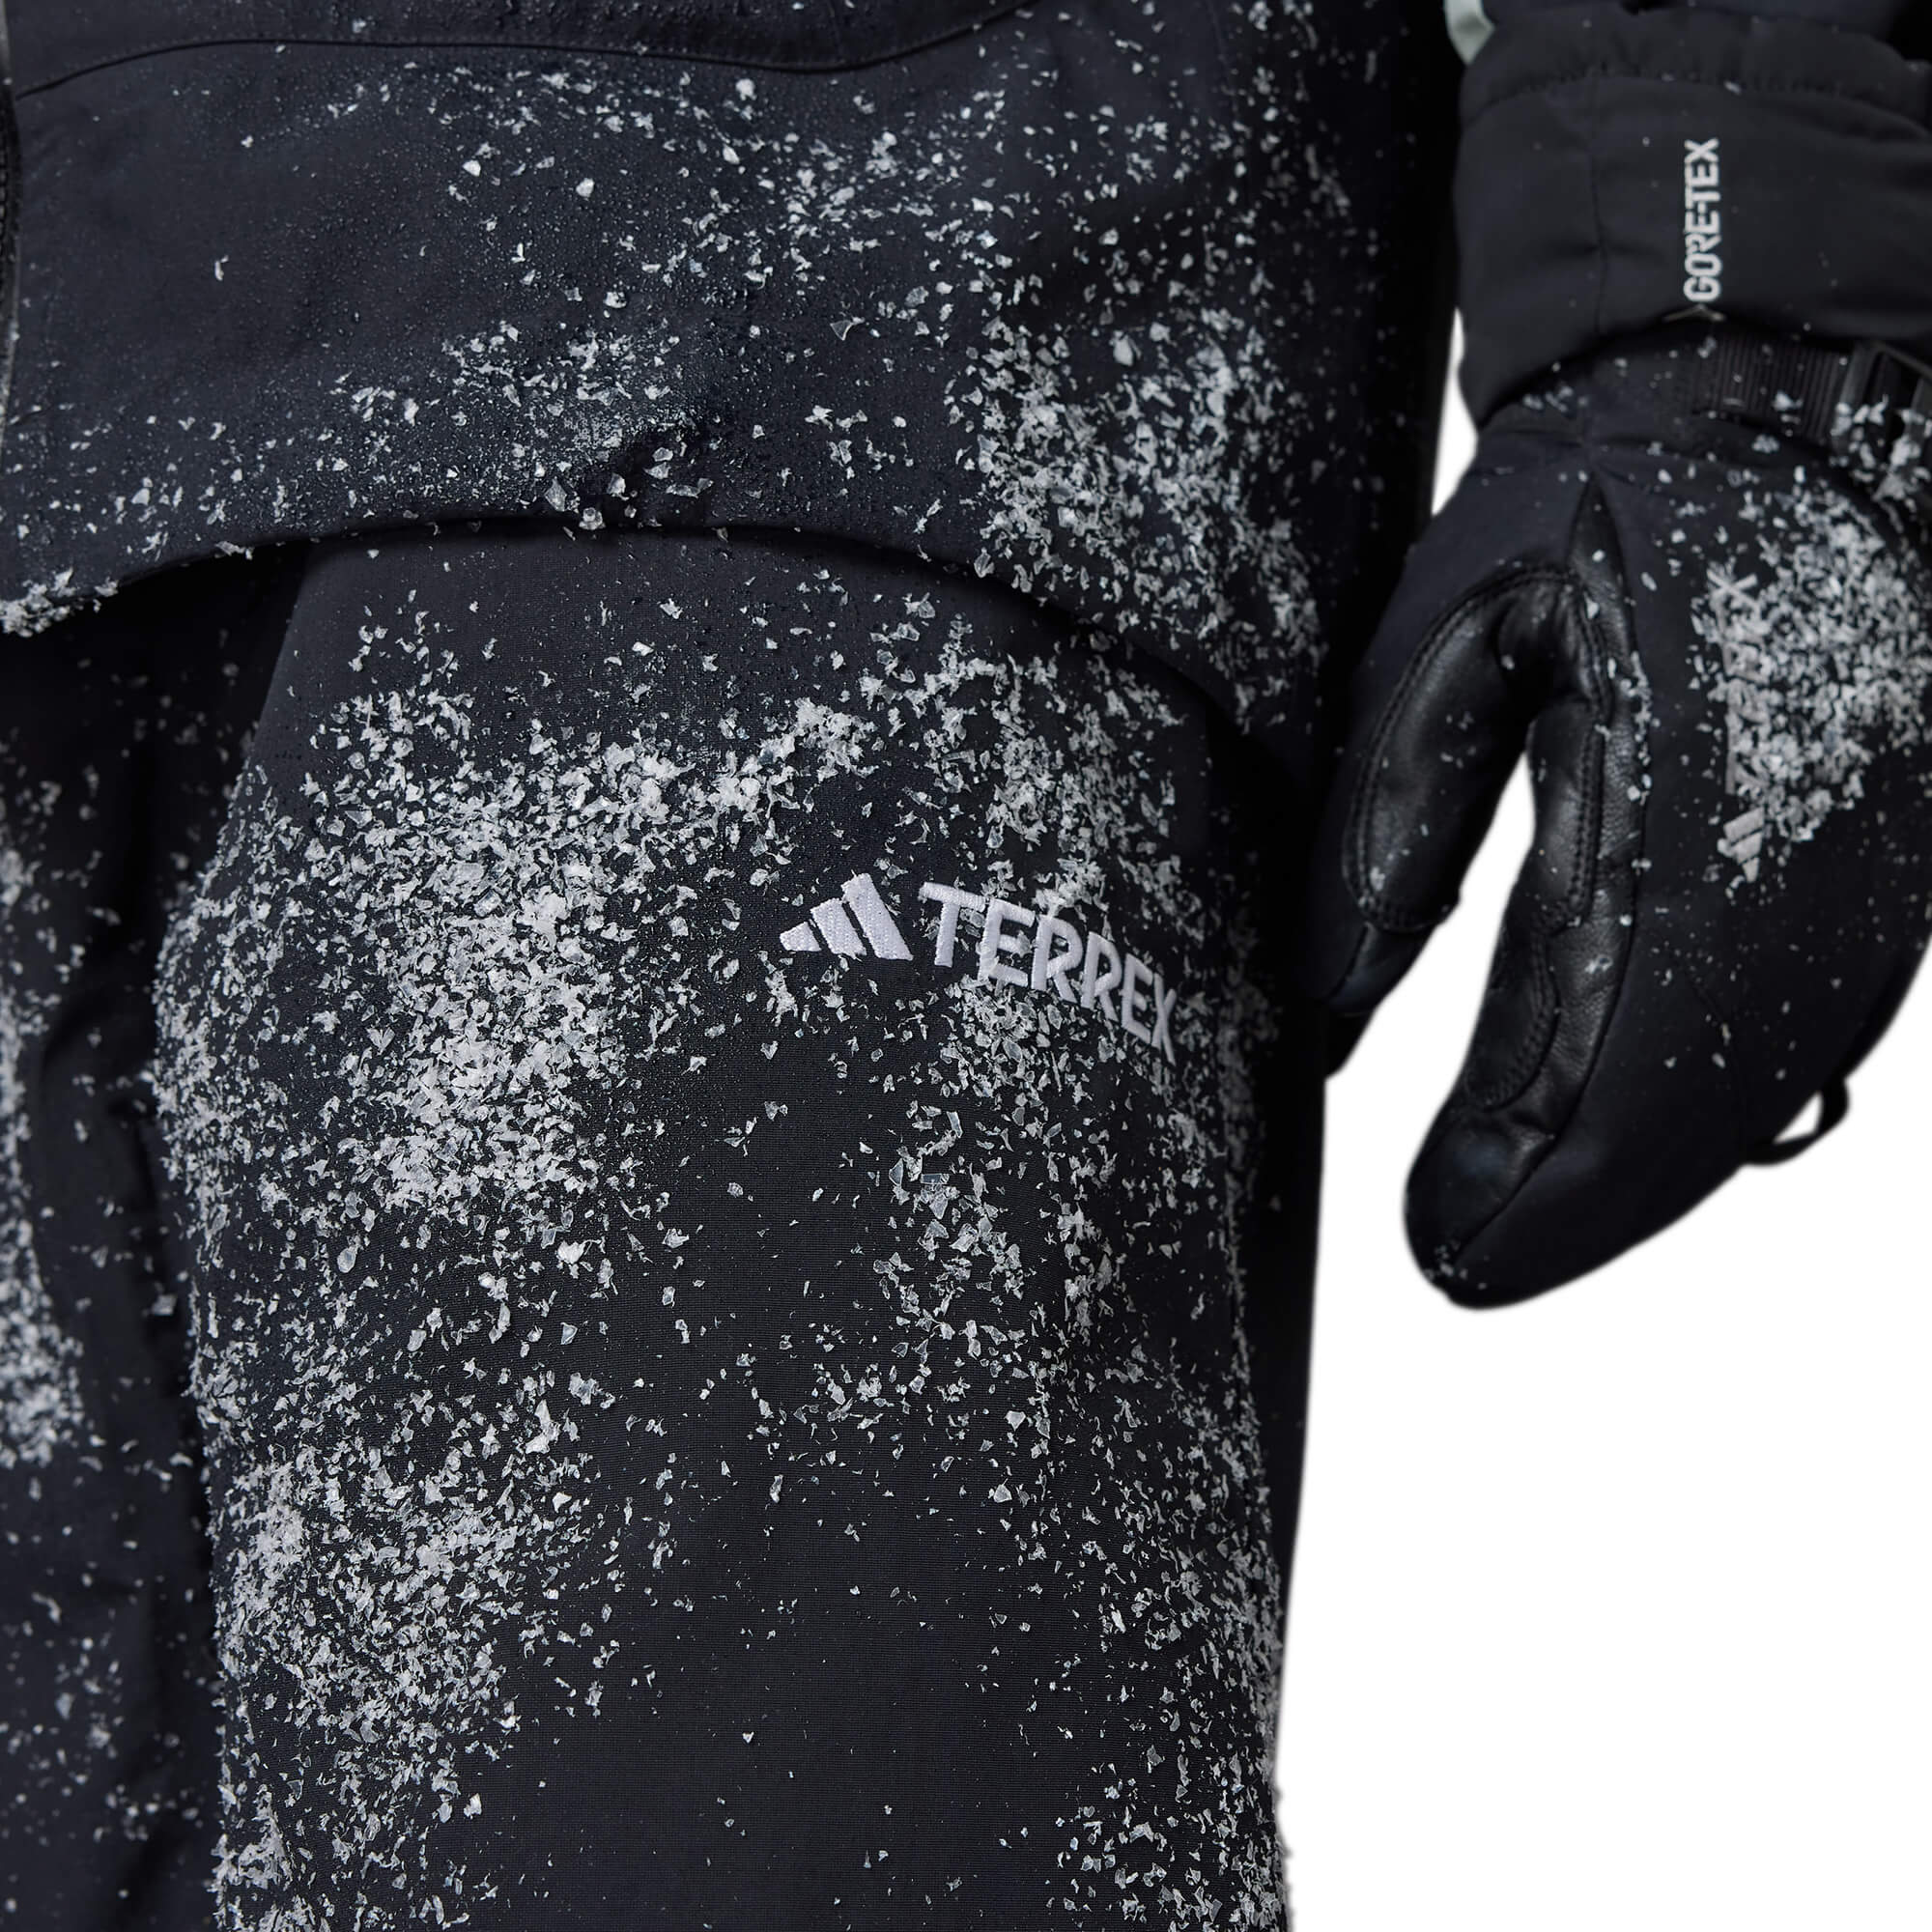 Adidas Terrex TechRock 3L GTX Snowboard/Ski Shell Pants